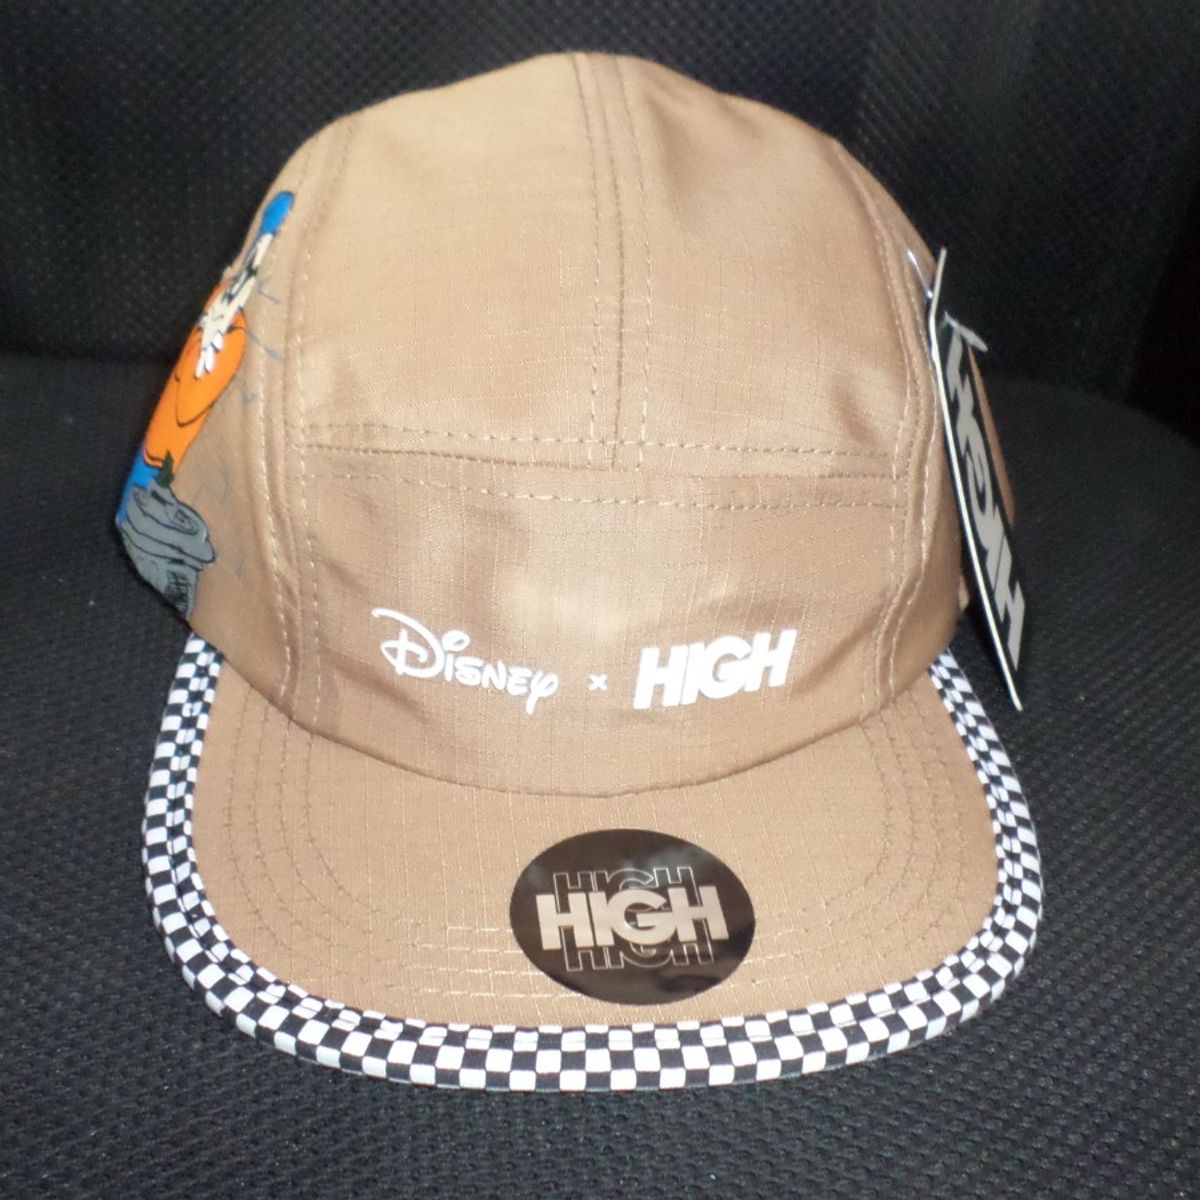 Promo! - Boné Disney X High 5 Panel Mickey